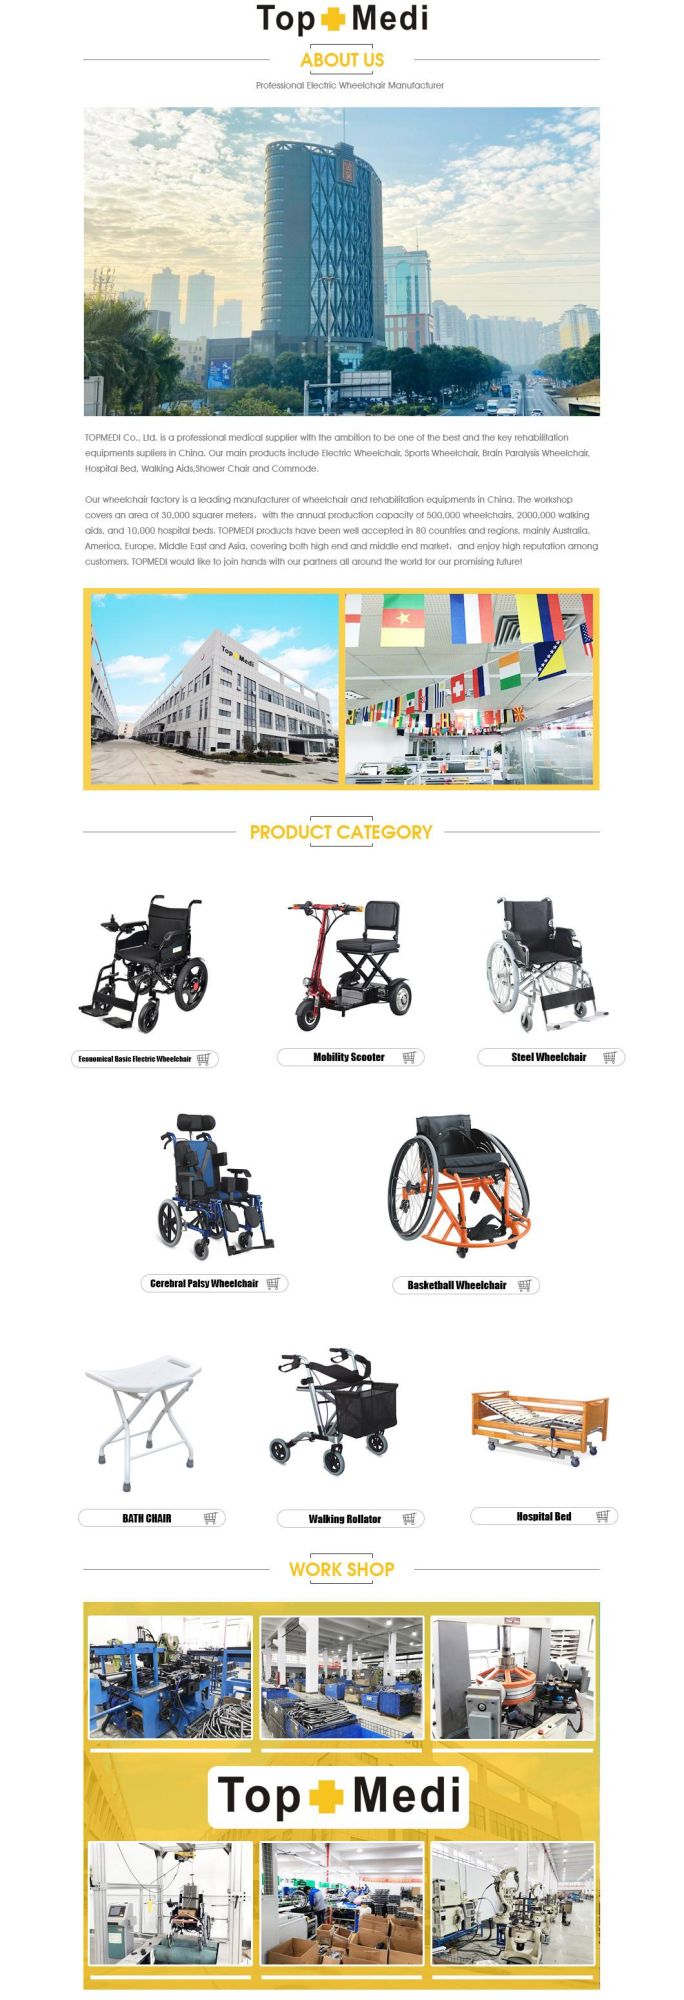 Bariatric Broaden Aluminum Wheelchair for Obesity People